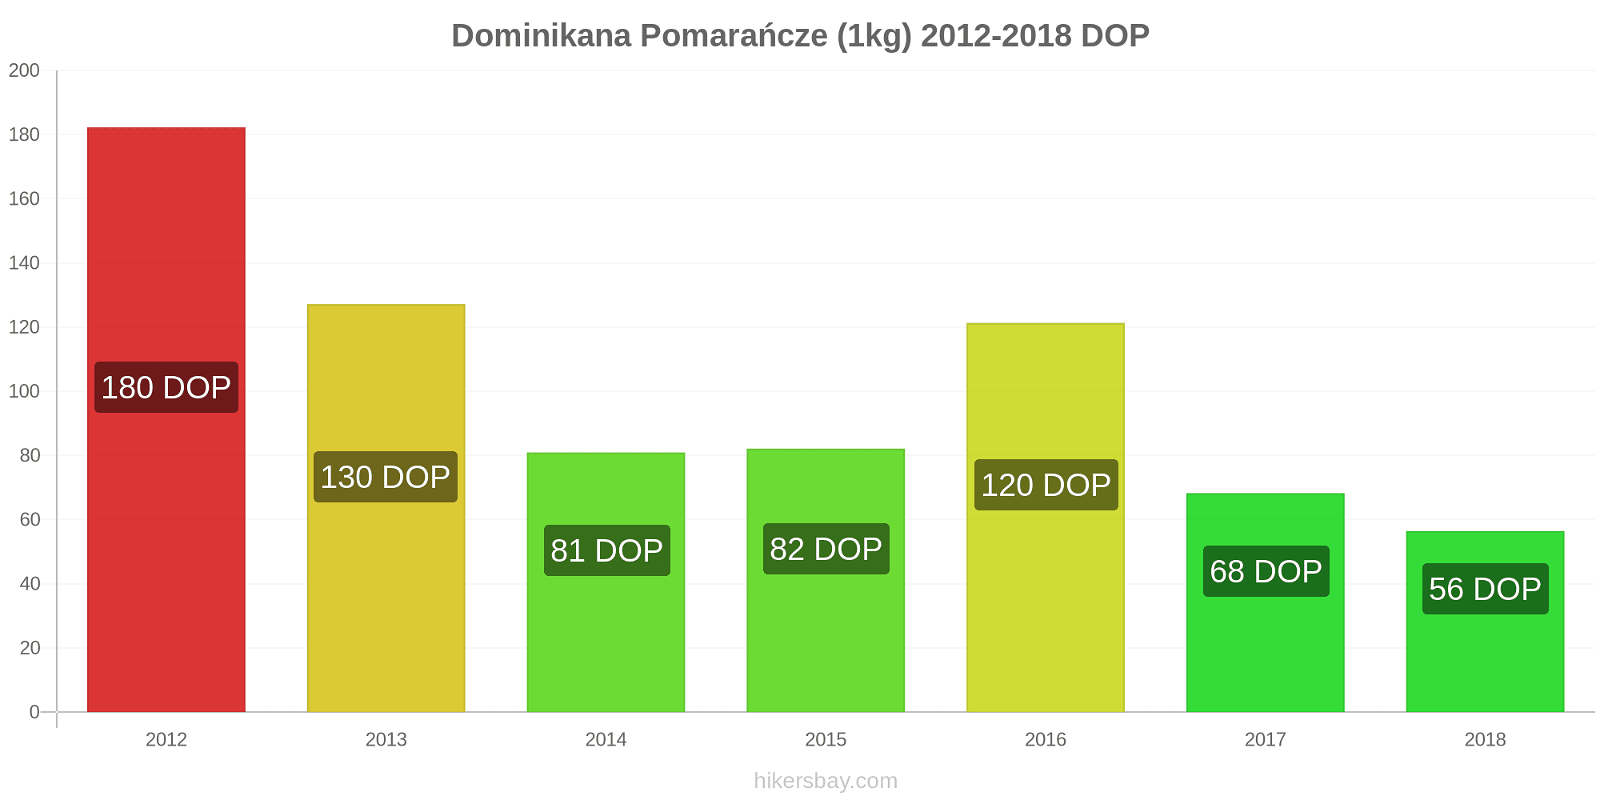 Dominikana zmiany cen Pomarańcze (1kg) hikersbay.com